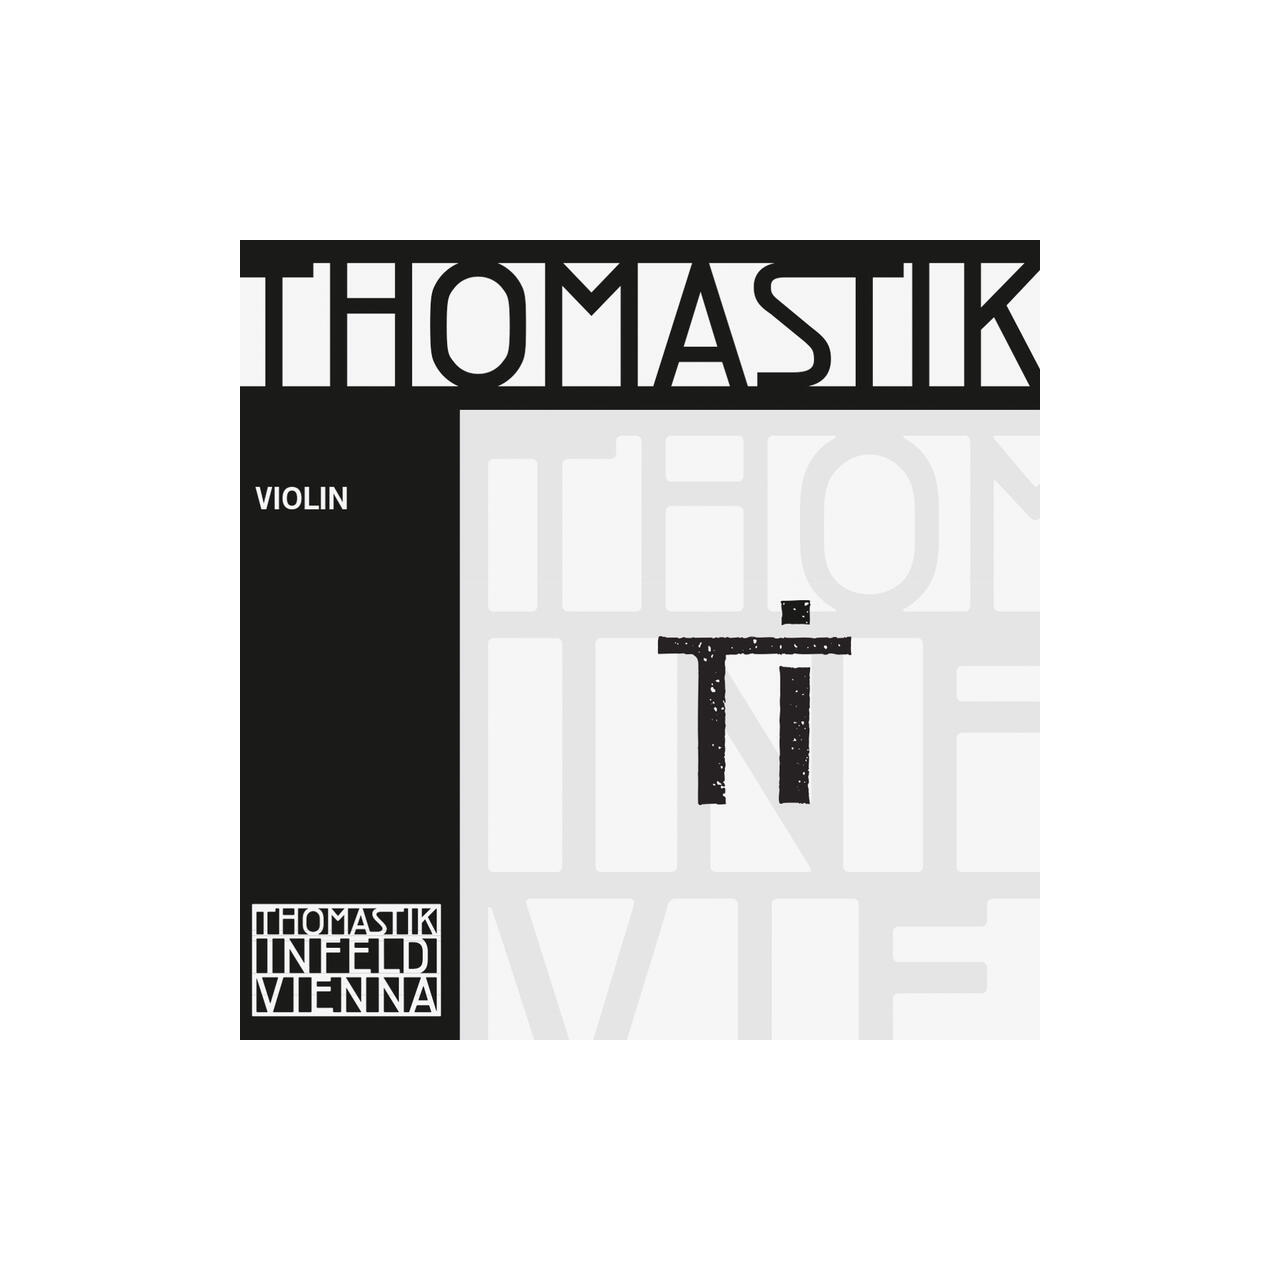 Thomastik Violin TI E 12er-Rohr (nur für Geigenbau)